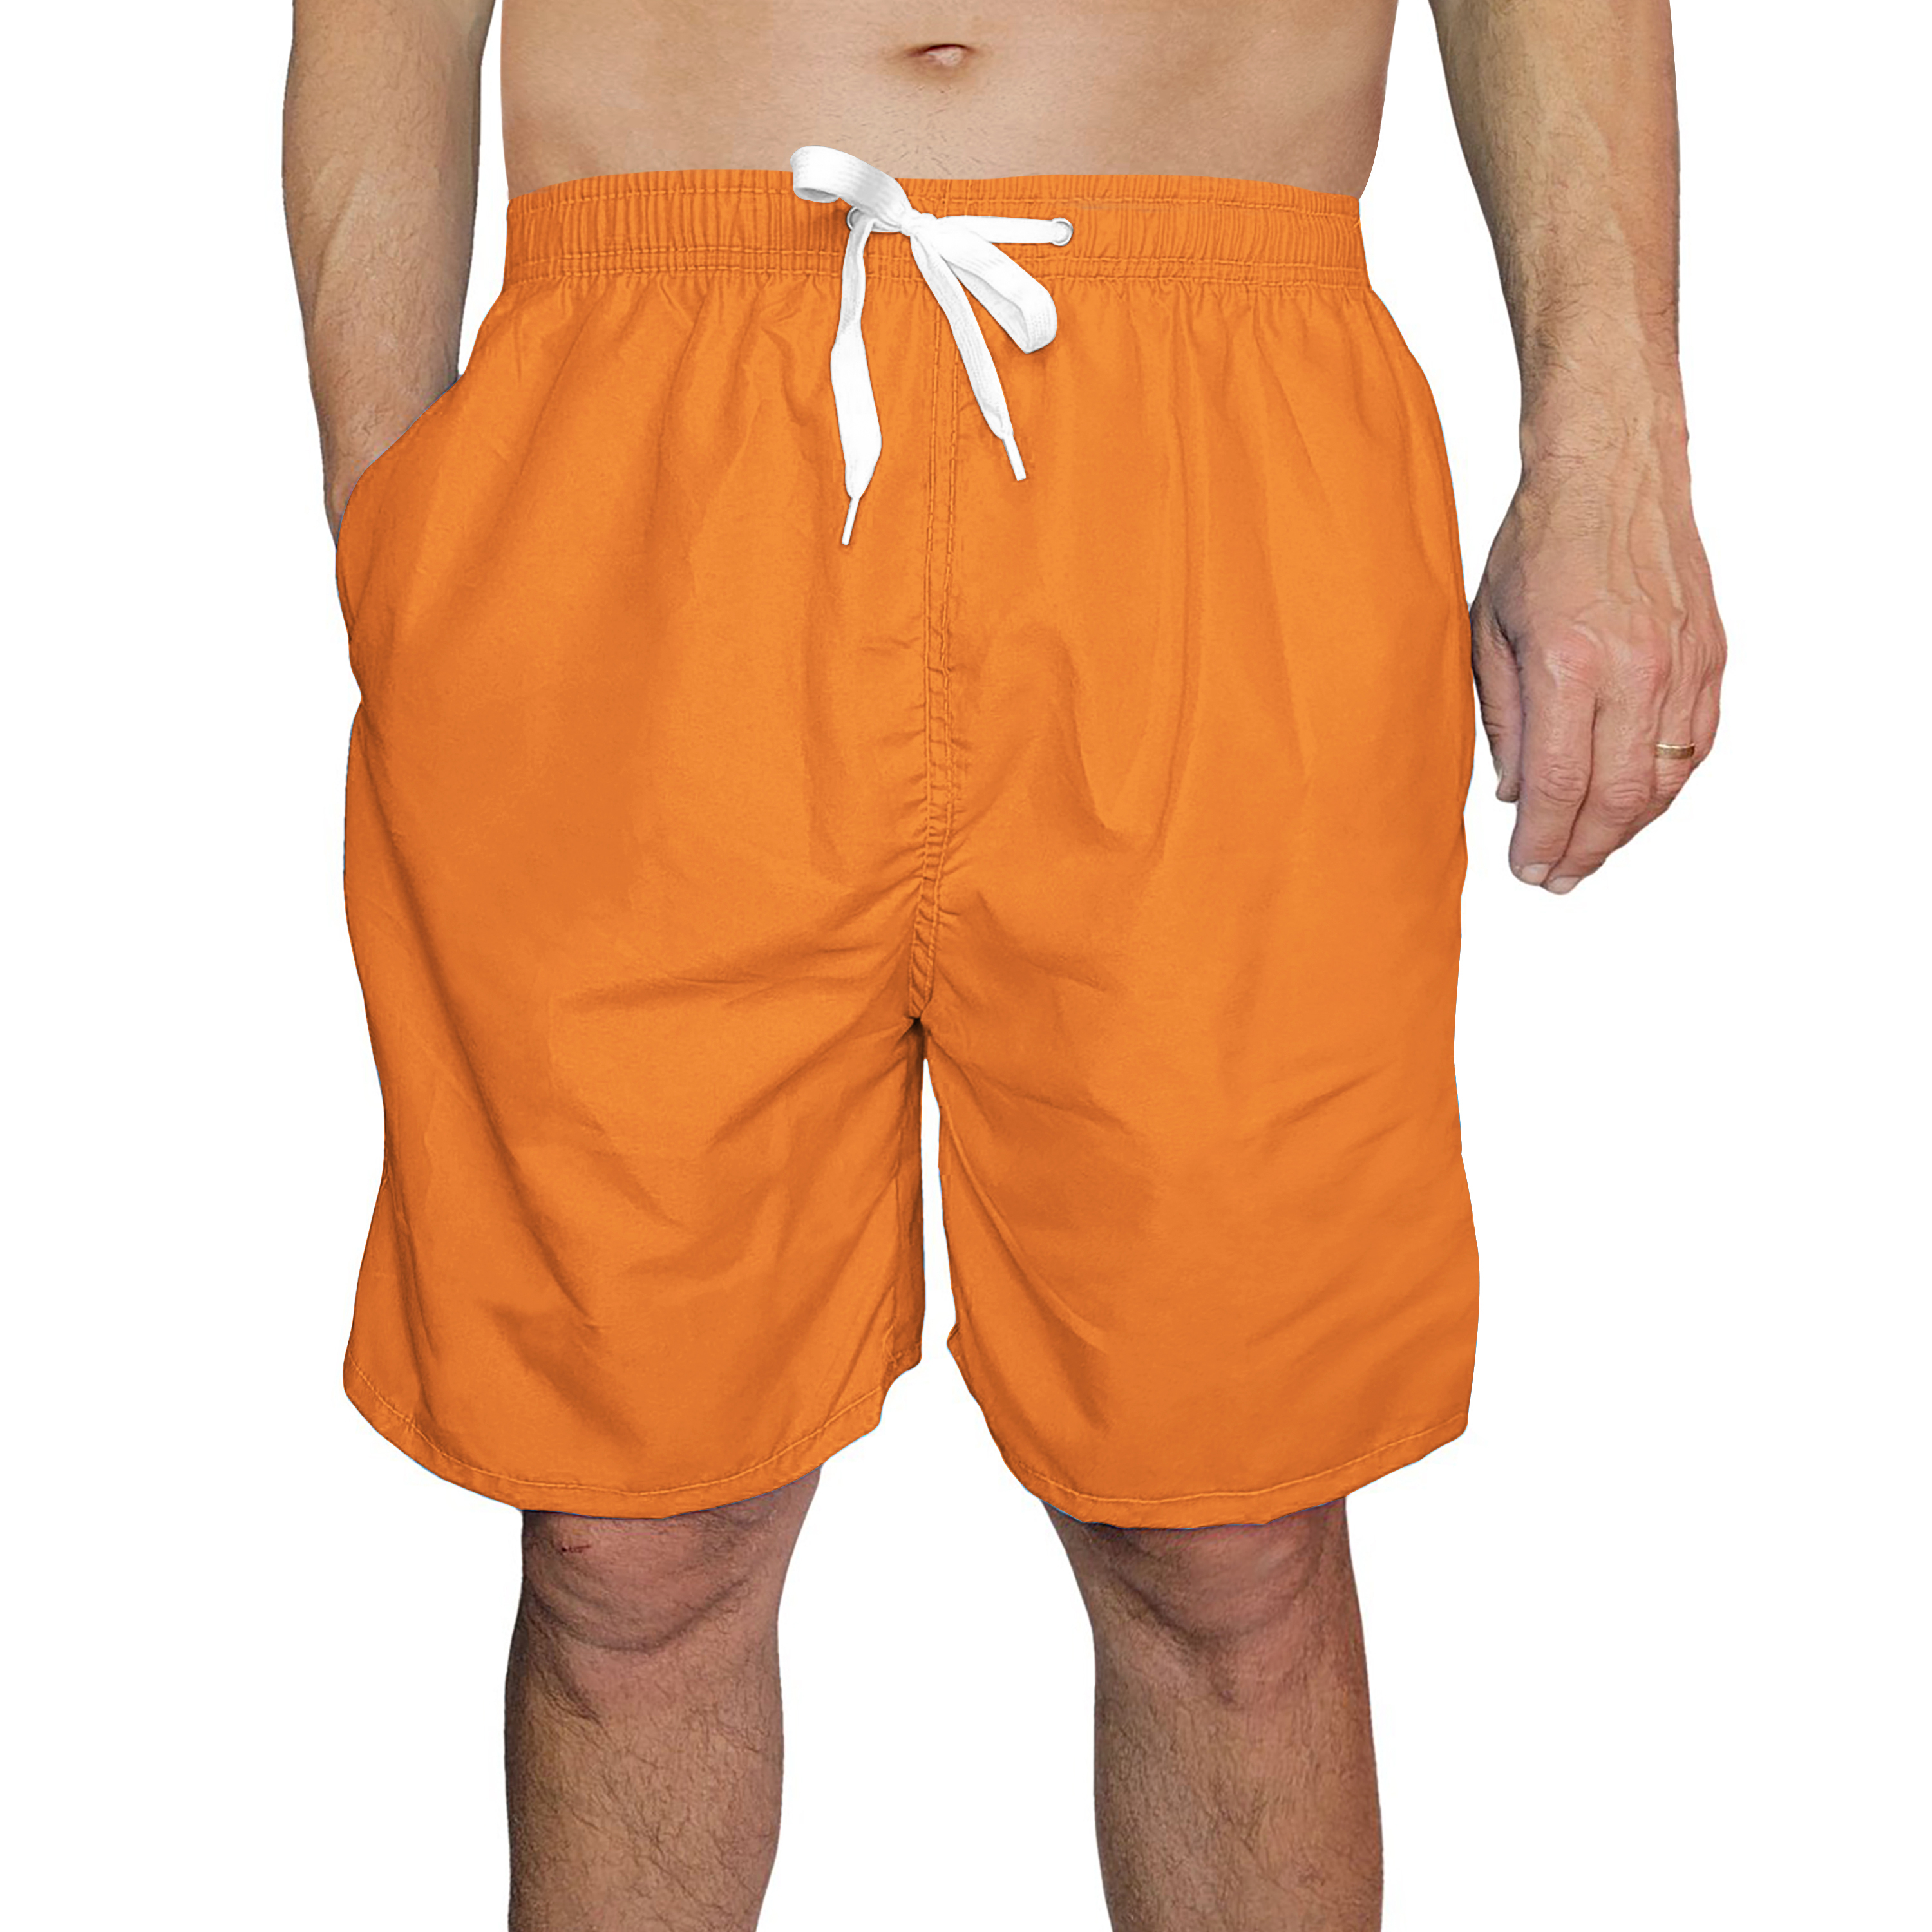 5-Pack Men's Quick Dry Swim Trunks With Pockets Solid Bathing Beachwear Flex Board Shorts - S